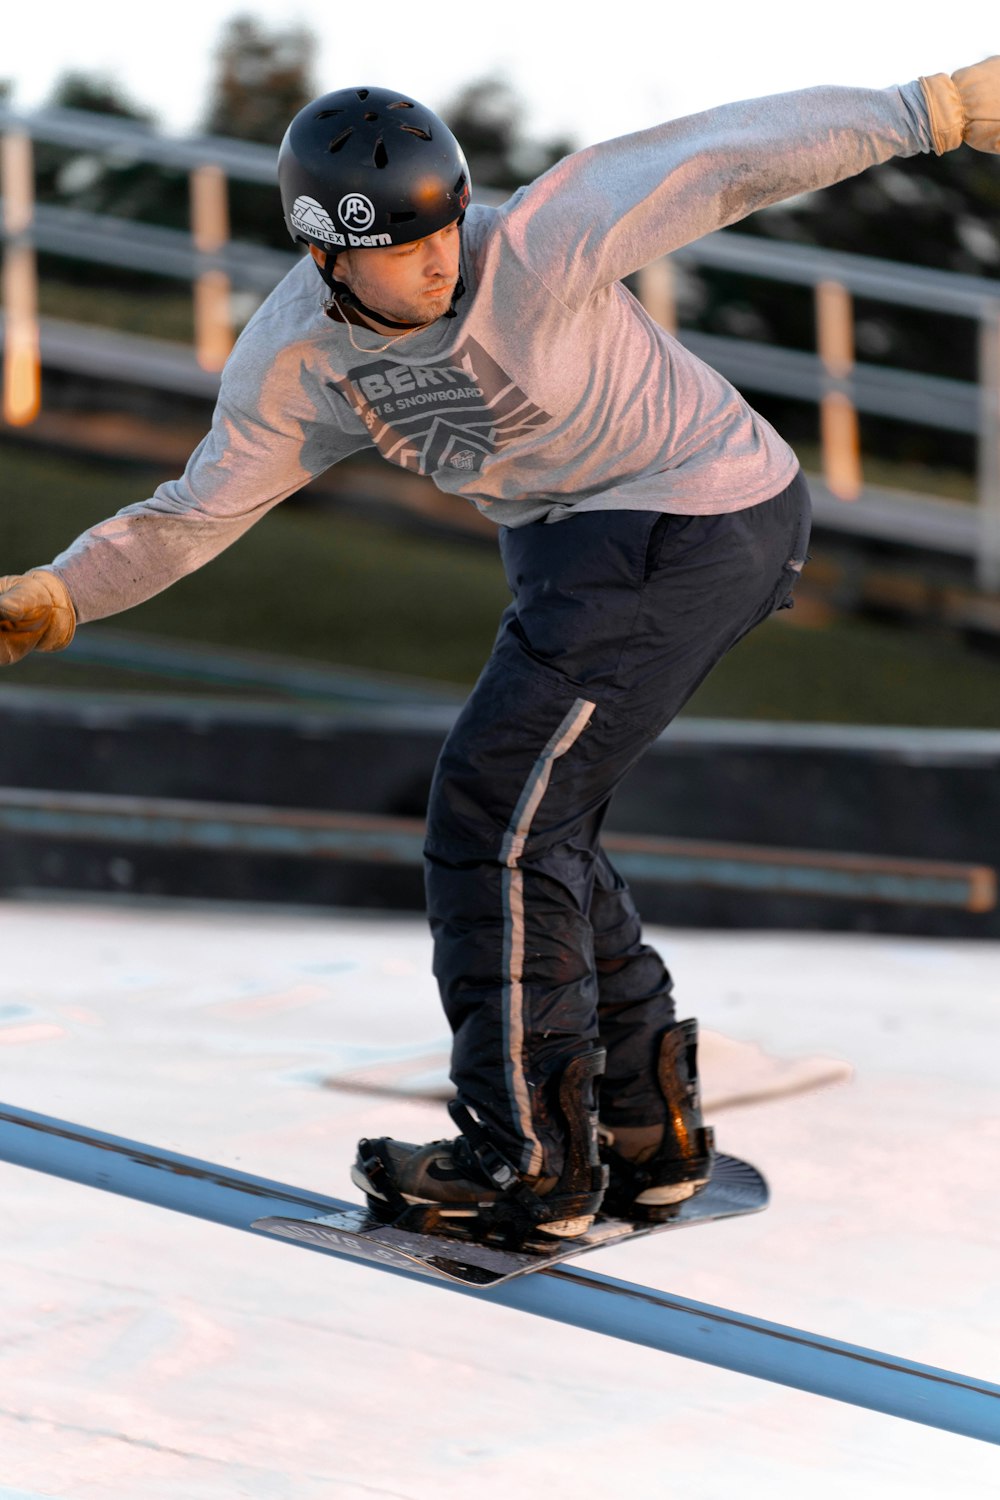 a man riding a skateboard down a ramp